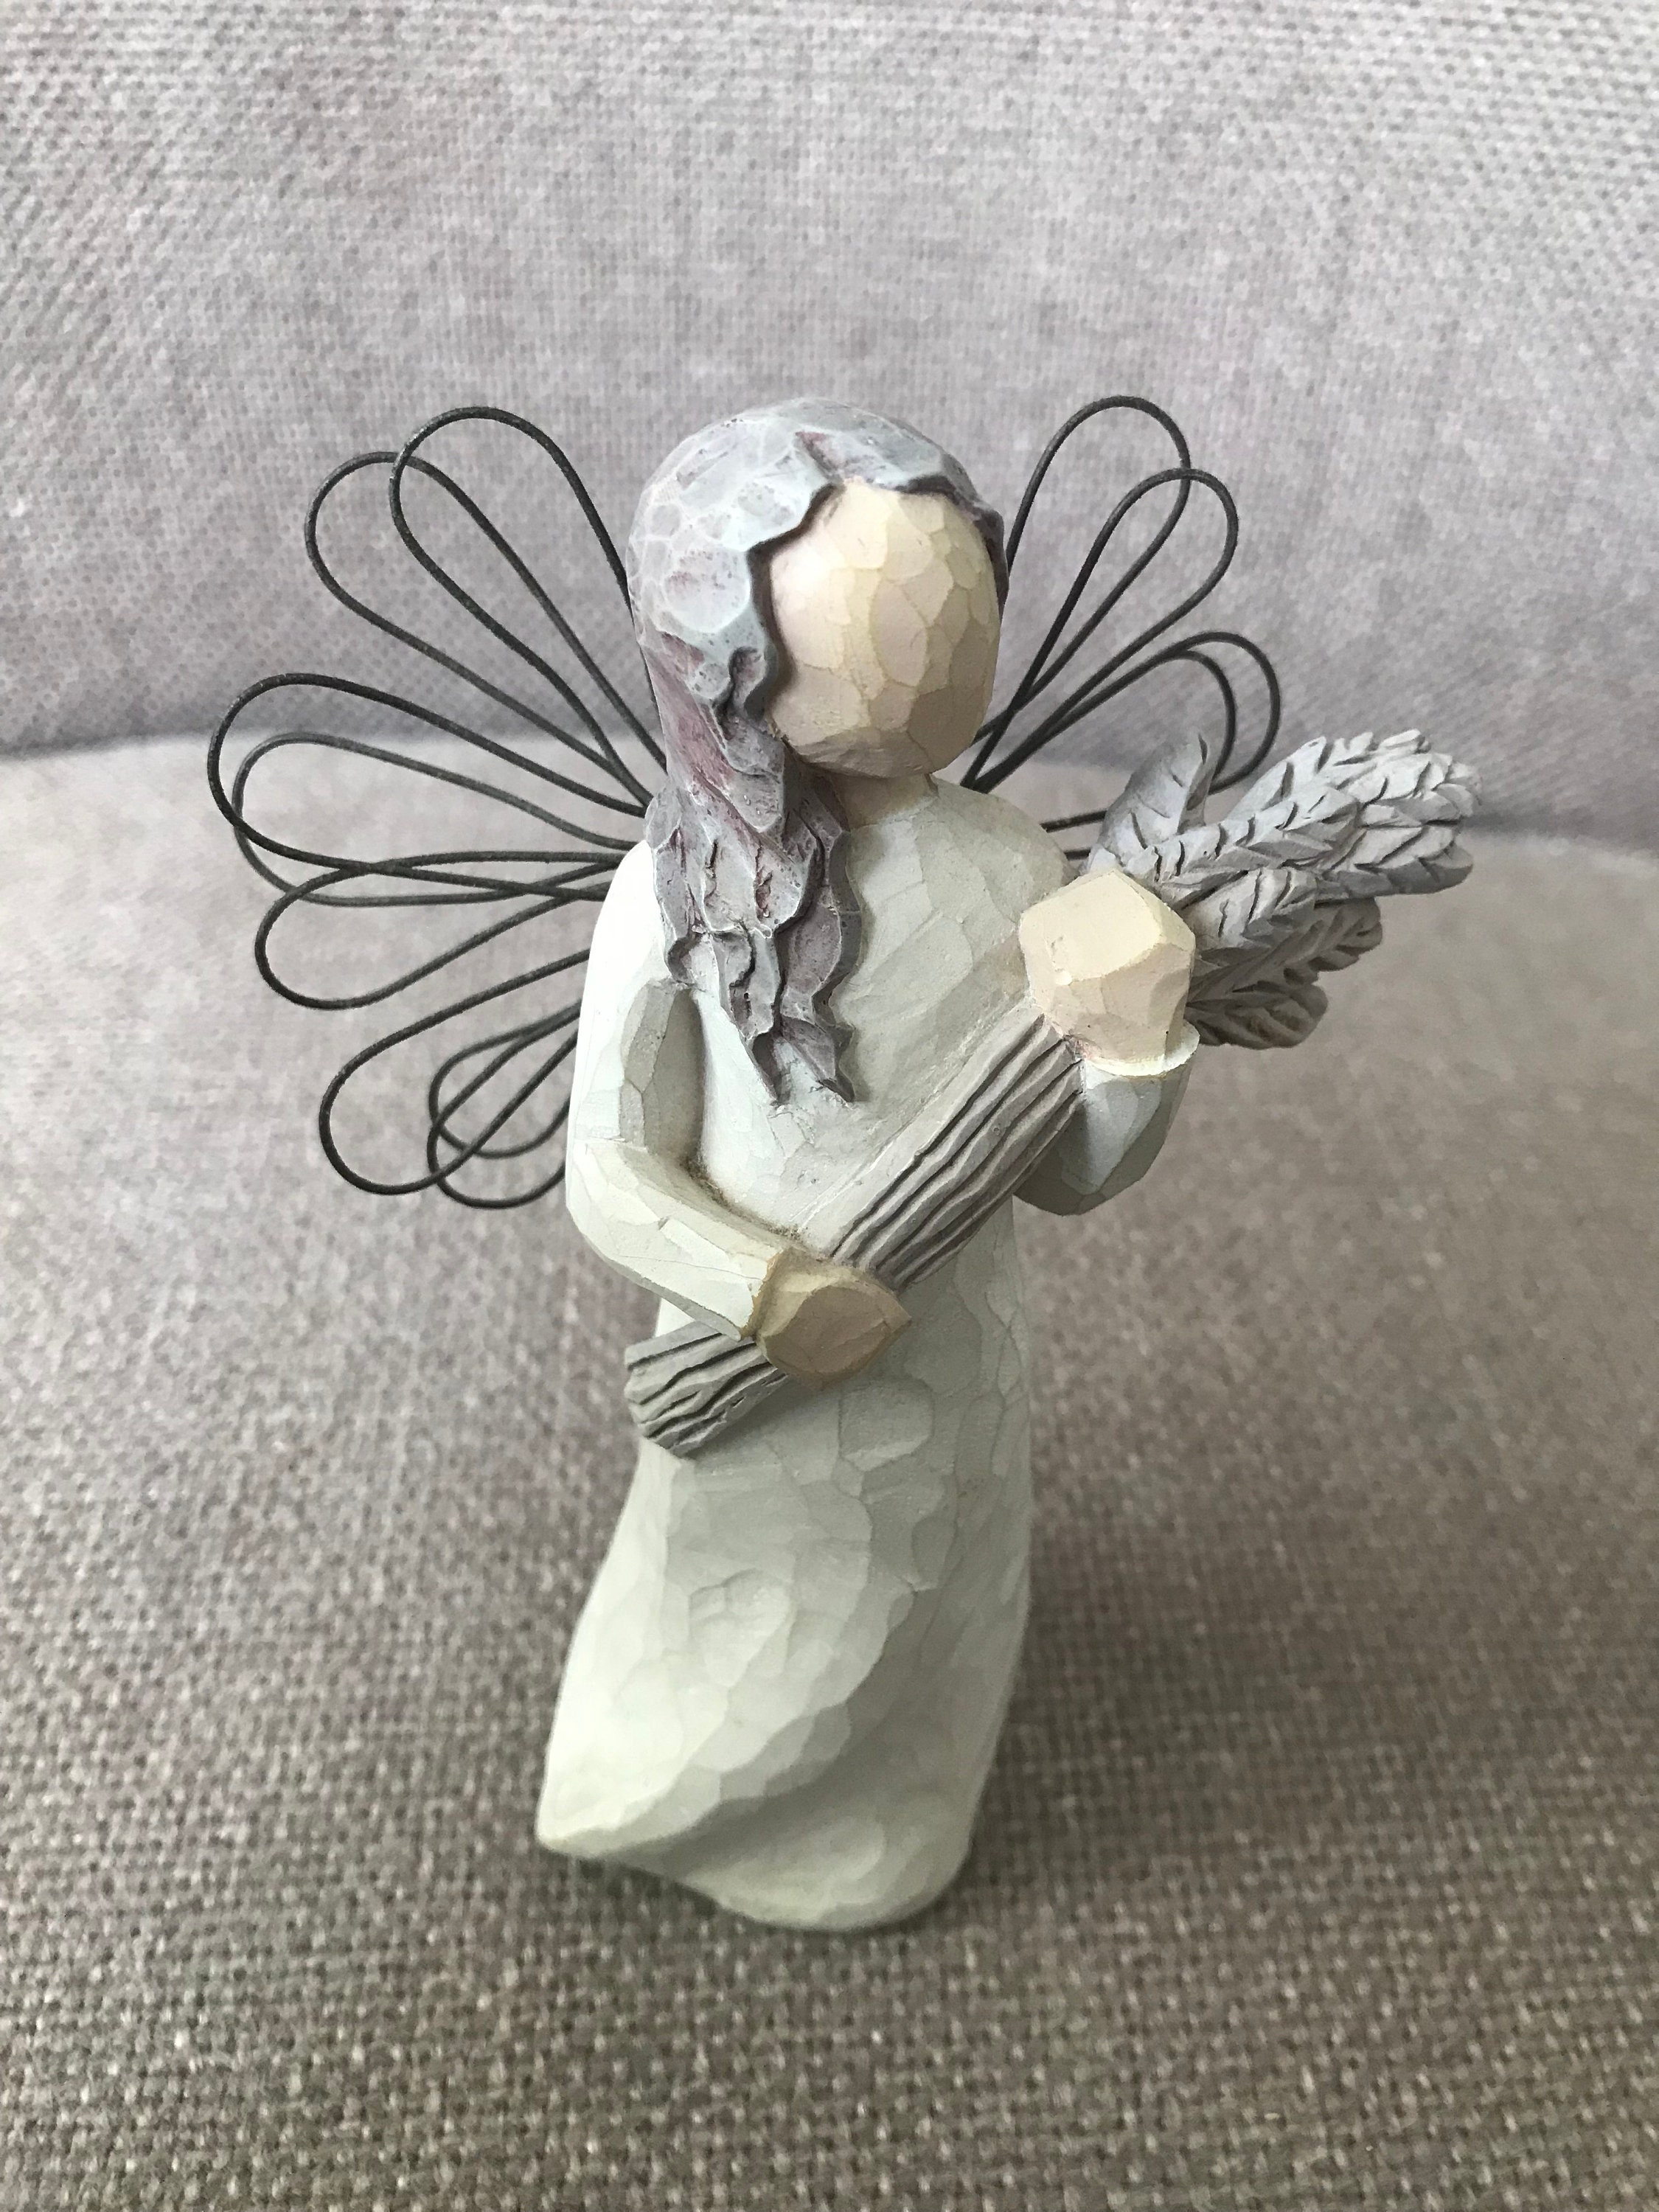 Willow Tree Messenger Figurine, 5.5 - Figurines - Hallmark